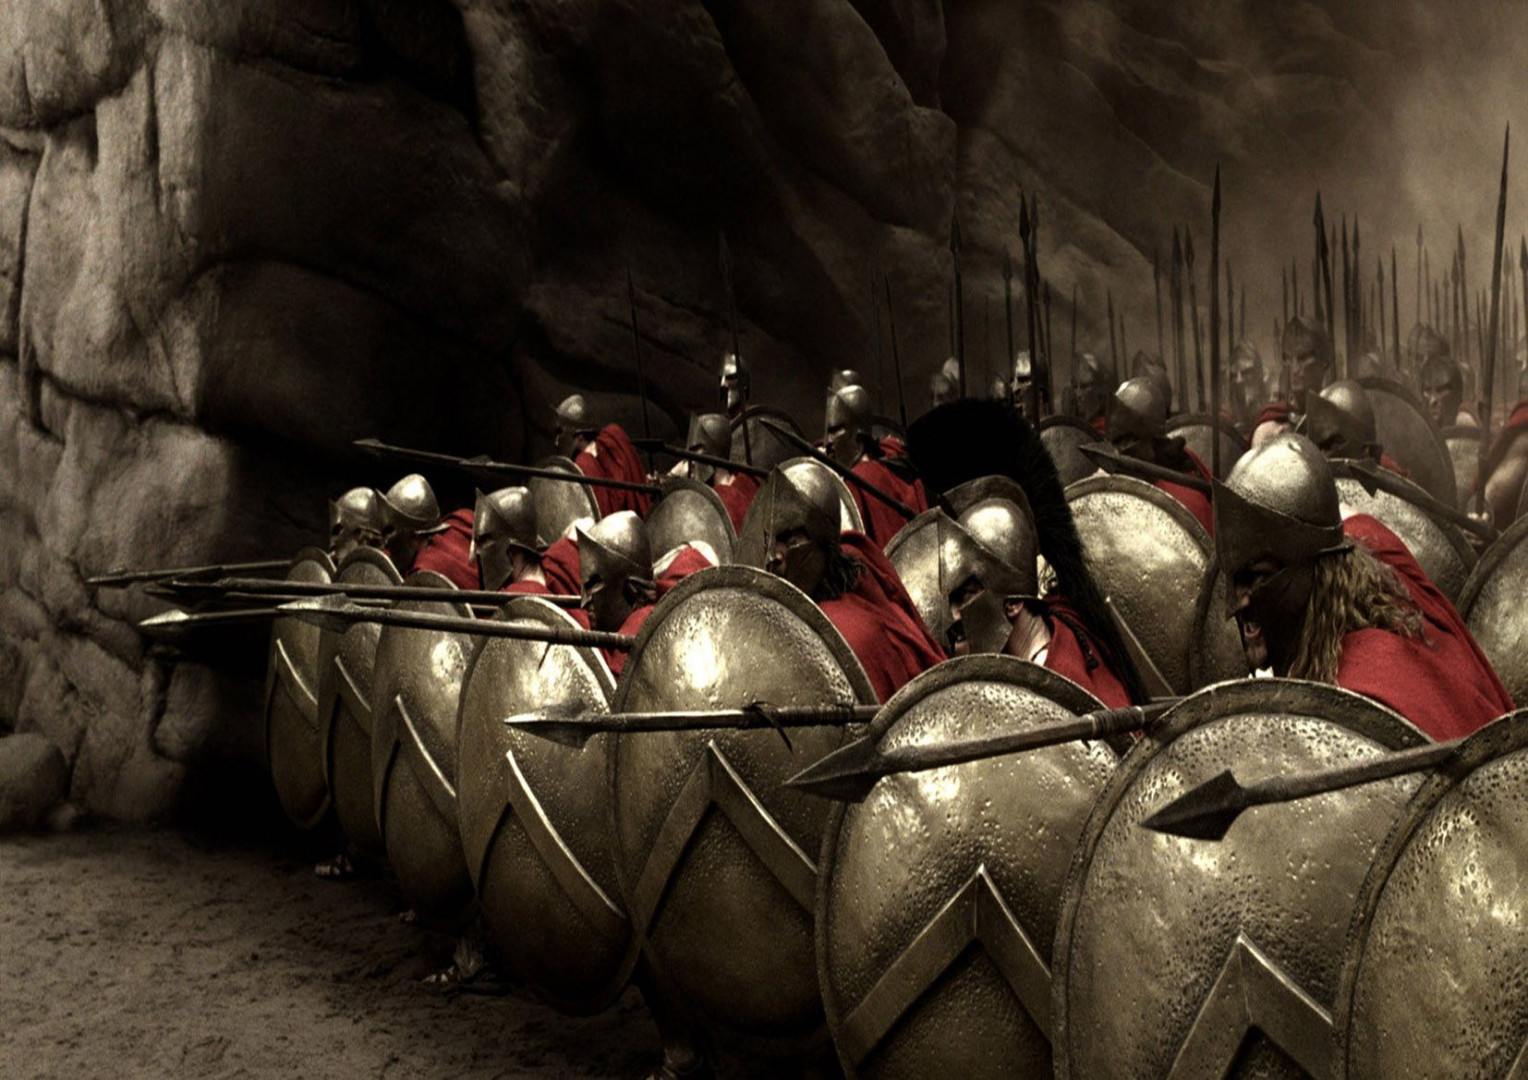 persian army vs spartans